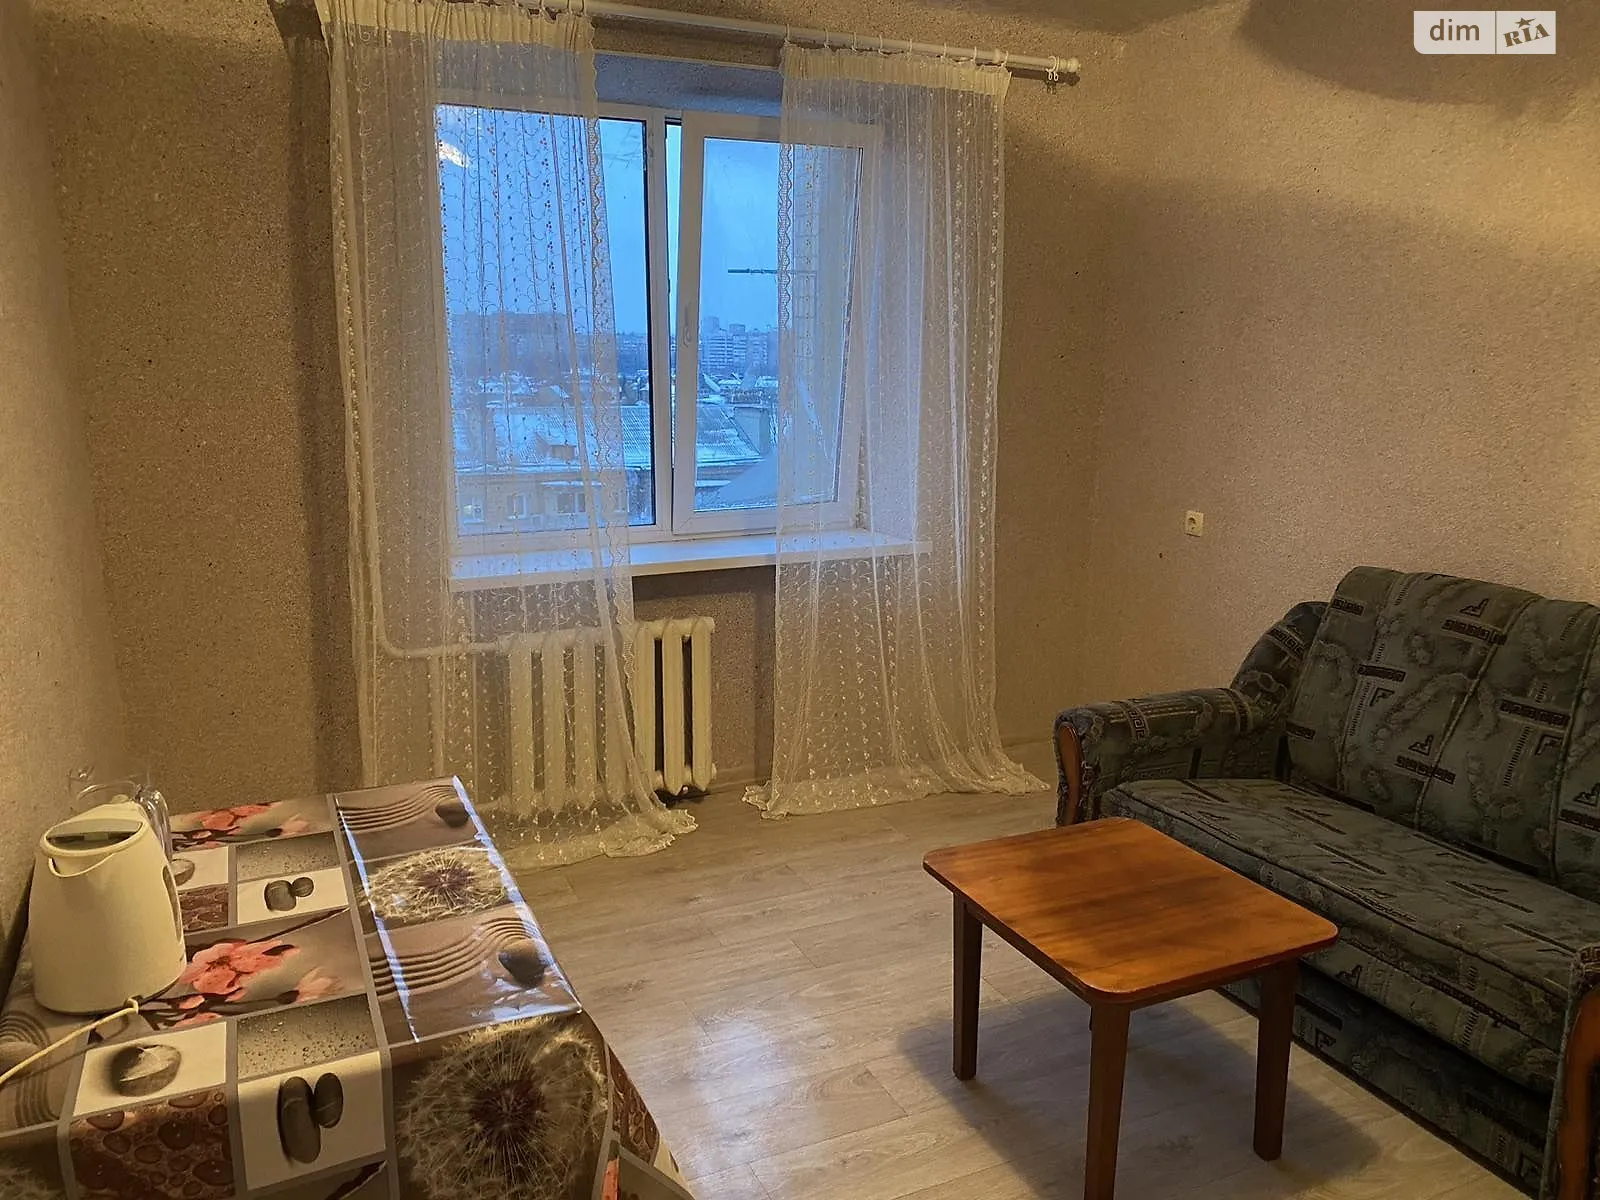 Продается комната 65 кв. м в Харькове - фото 3